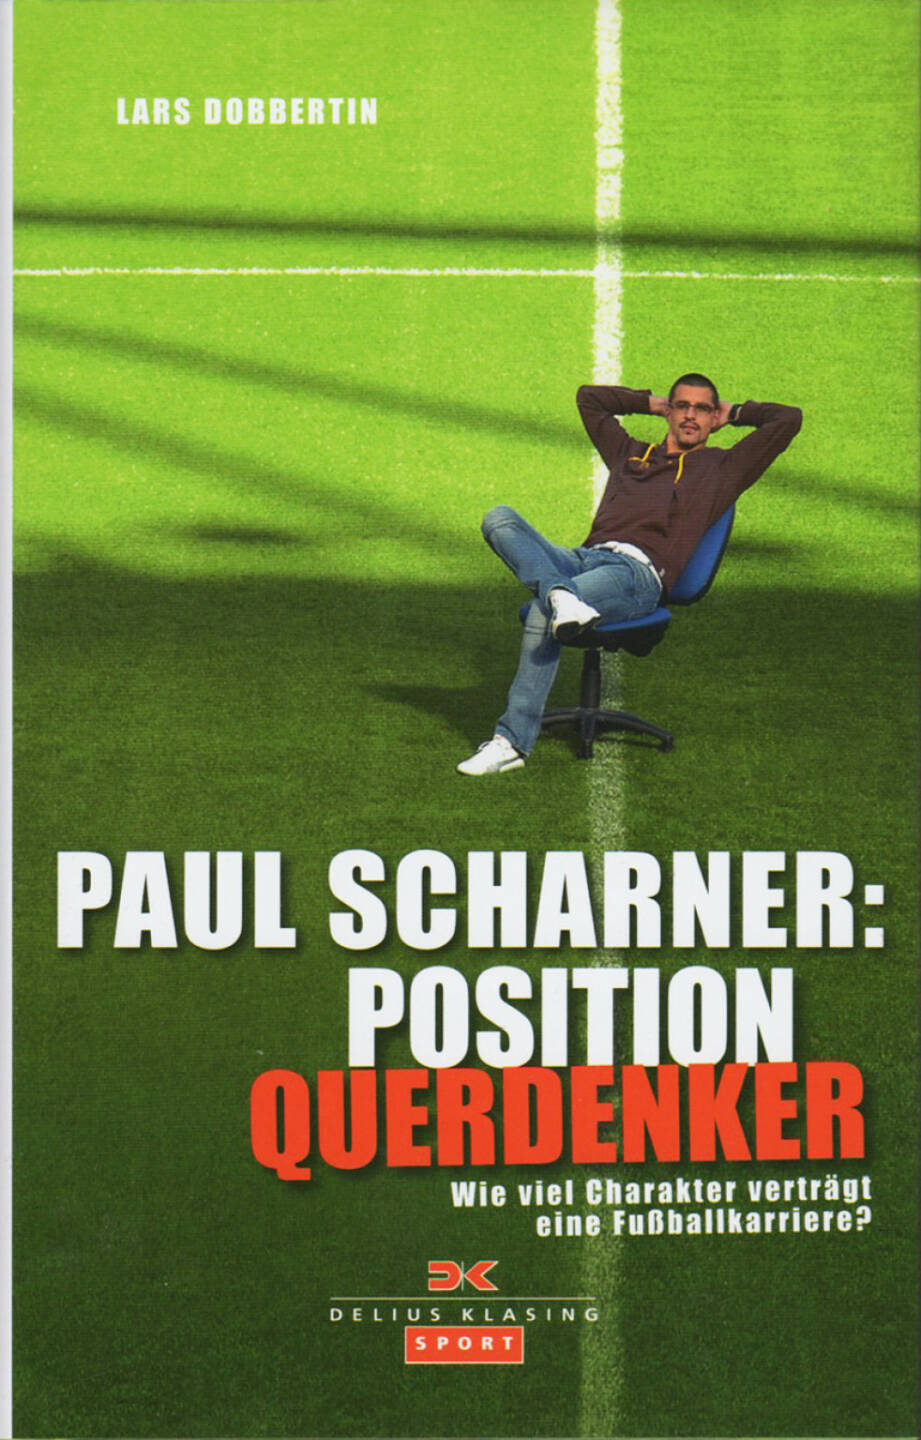 Paul Scharner: Position Querdenker, http://boerse-social.com/financebooks/show/lars_dobbertin_-_paul_scharner_position_querdenker_wie_viel_charakter_vertragt_eine_fussballkarriere